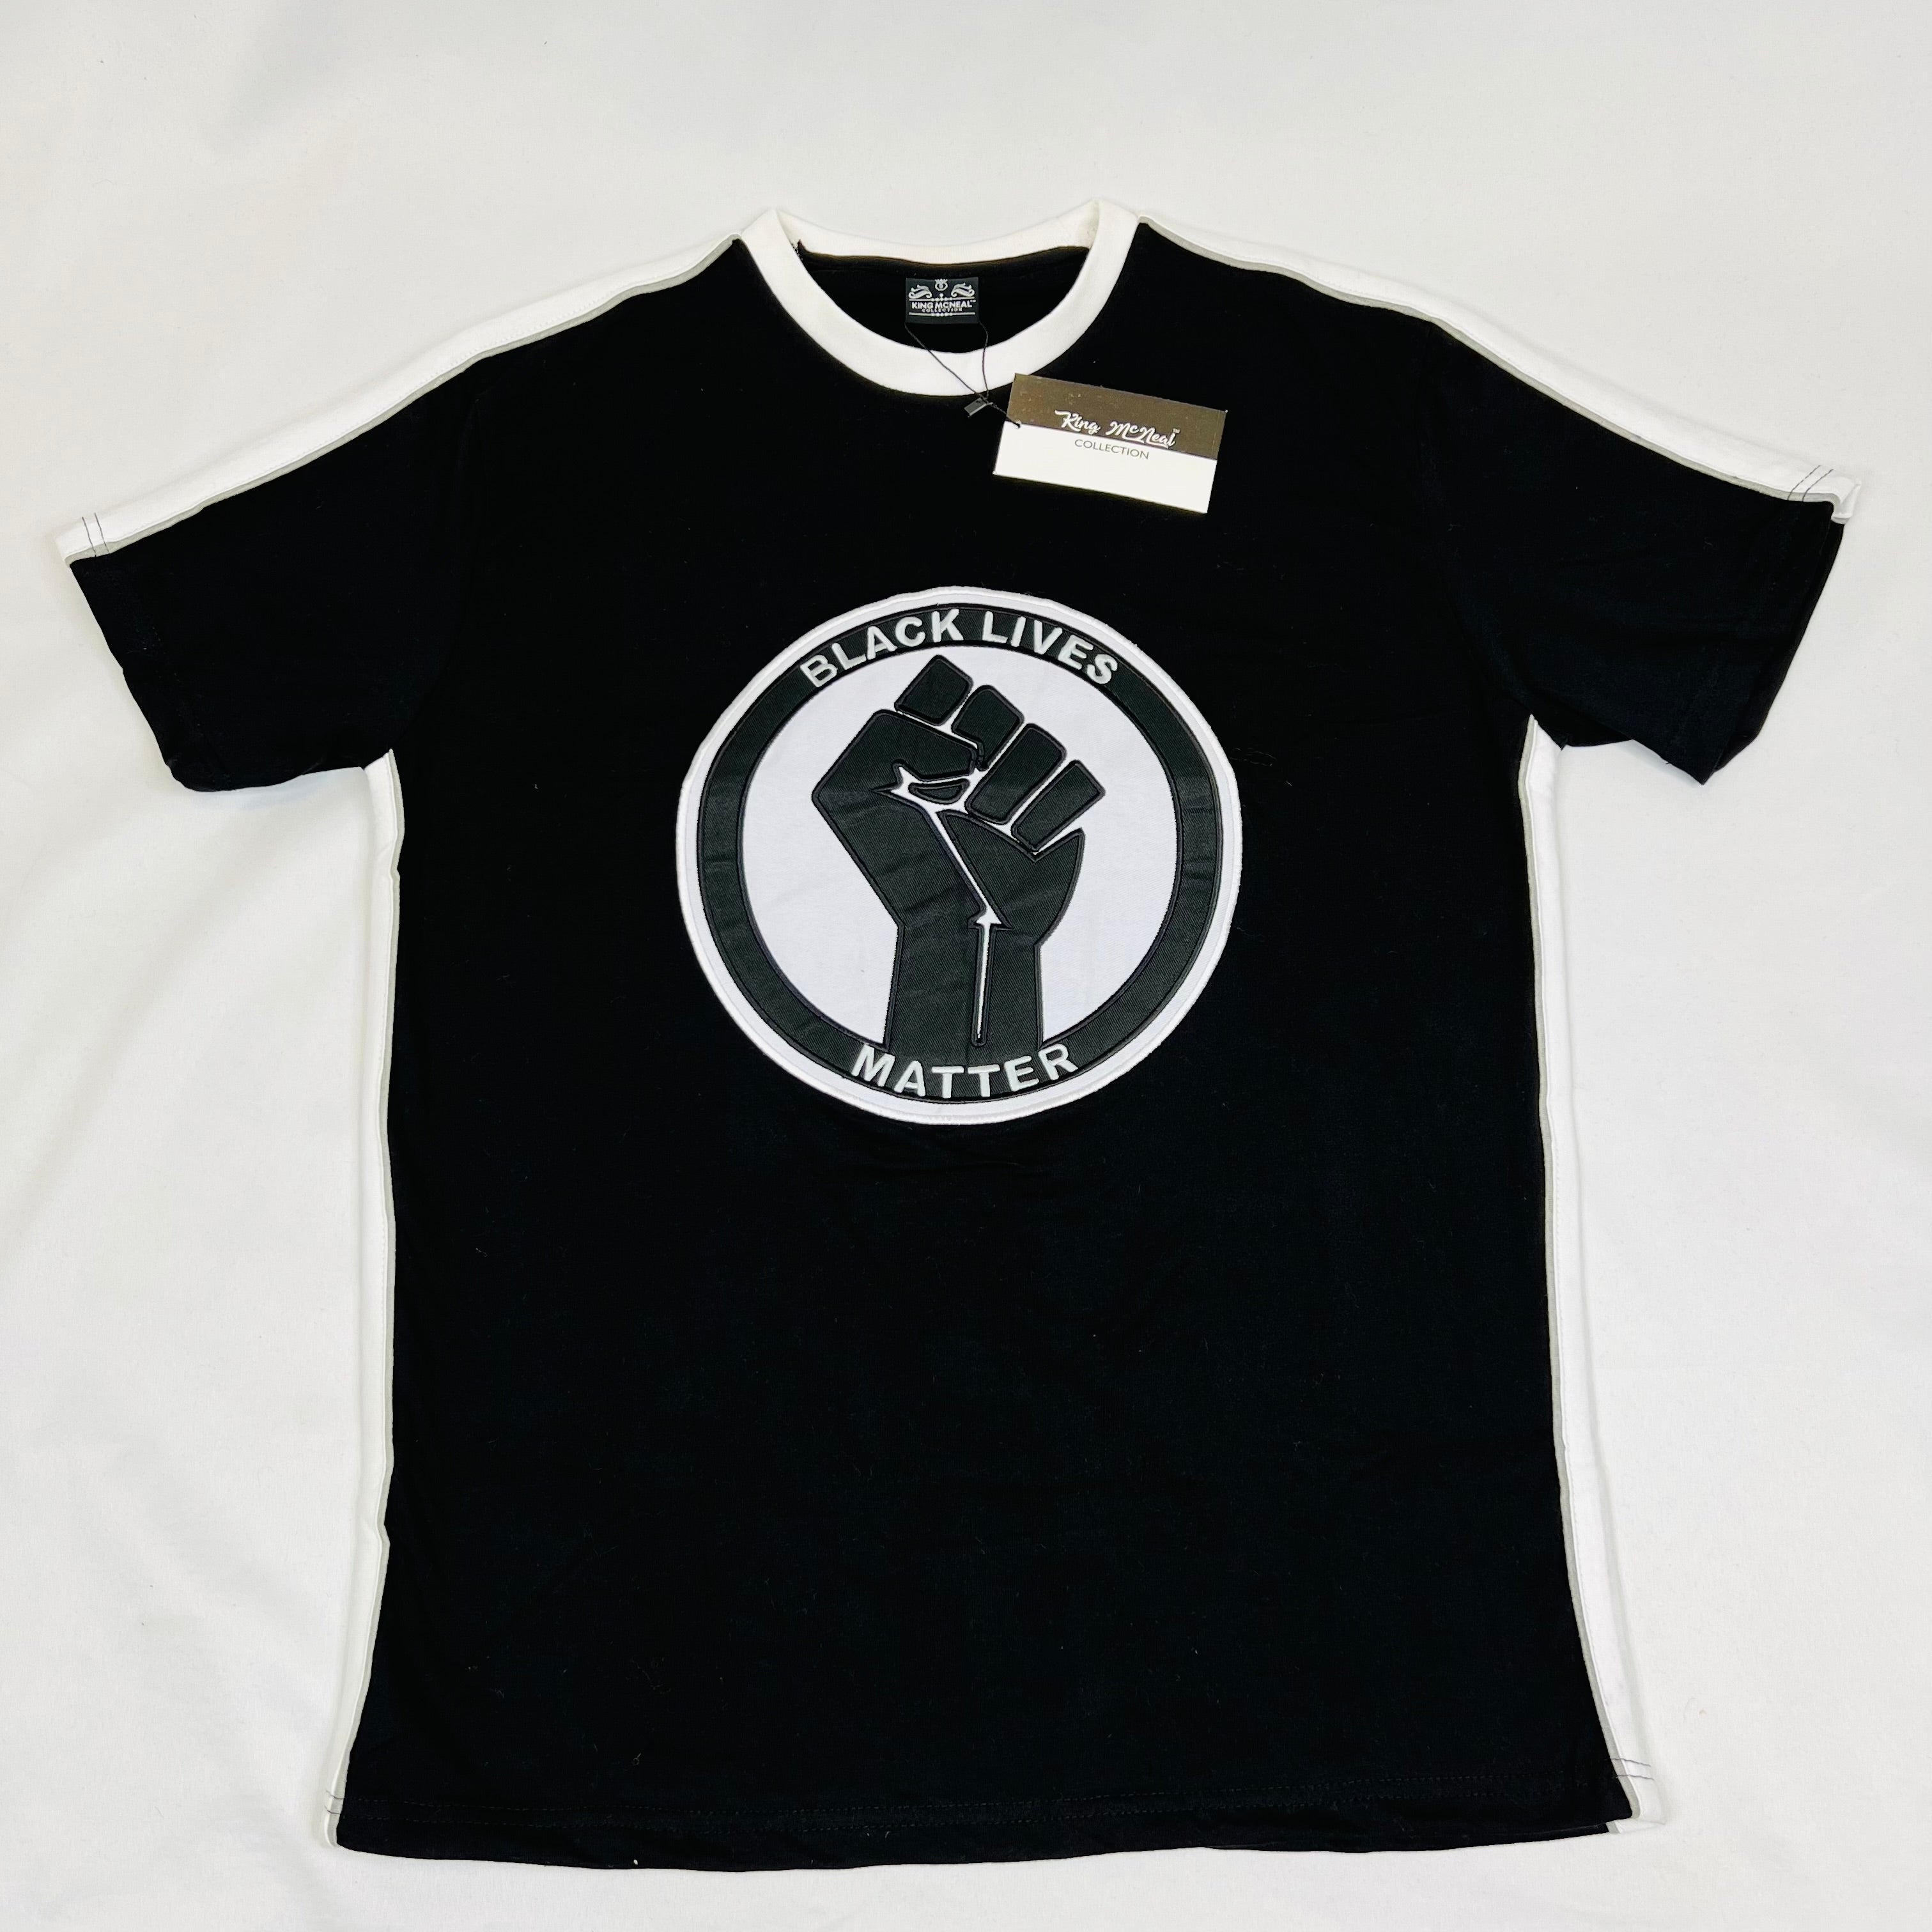 Black Lives Matter Shirt Blk/Wht